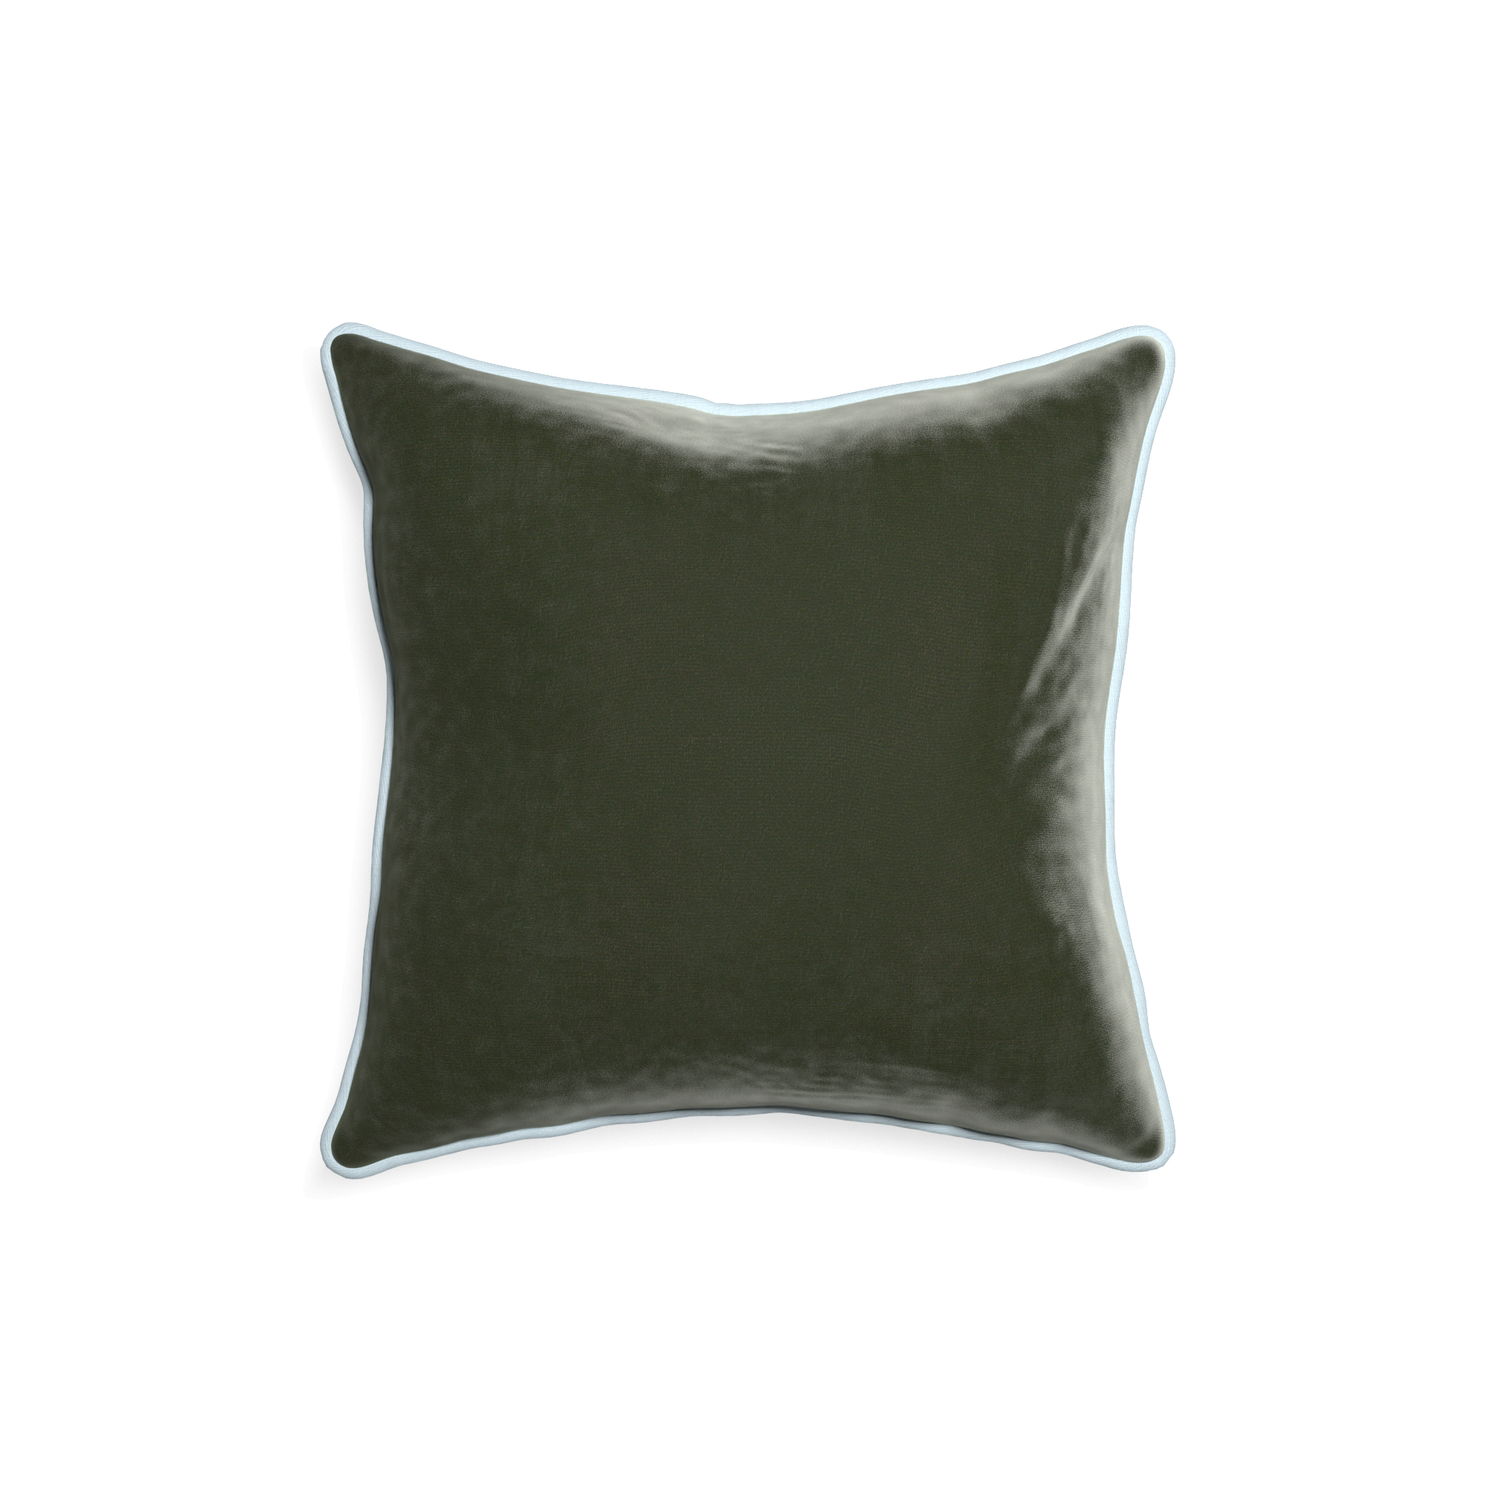 18-square fern velvet custom pillow with powder piping on white background